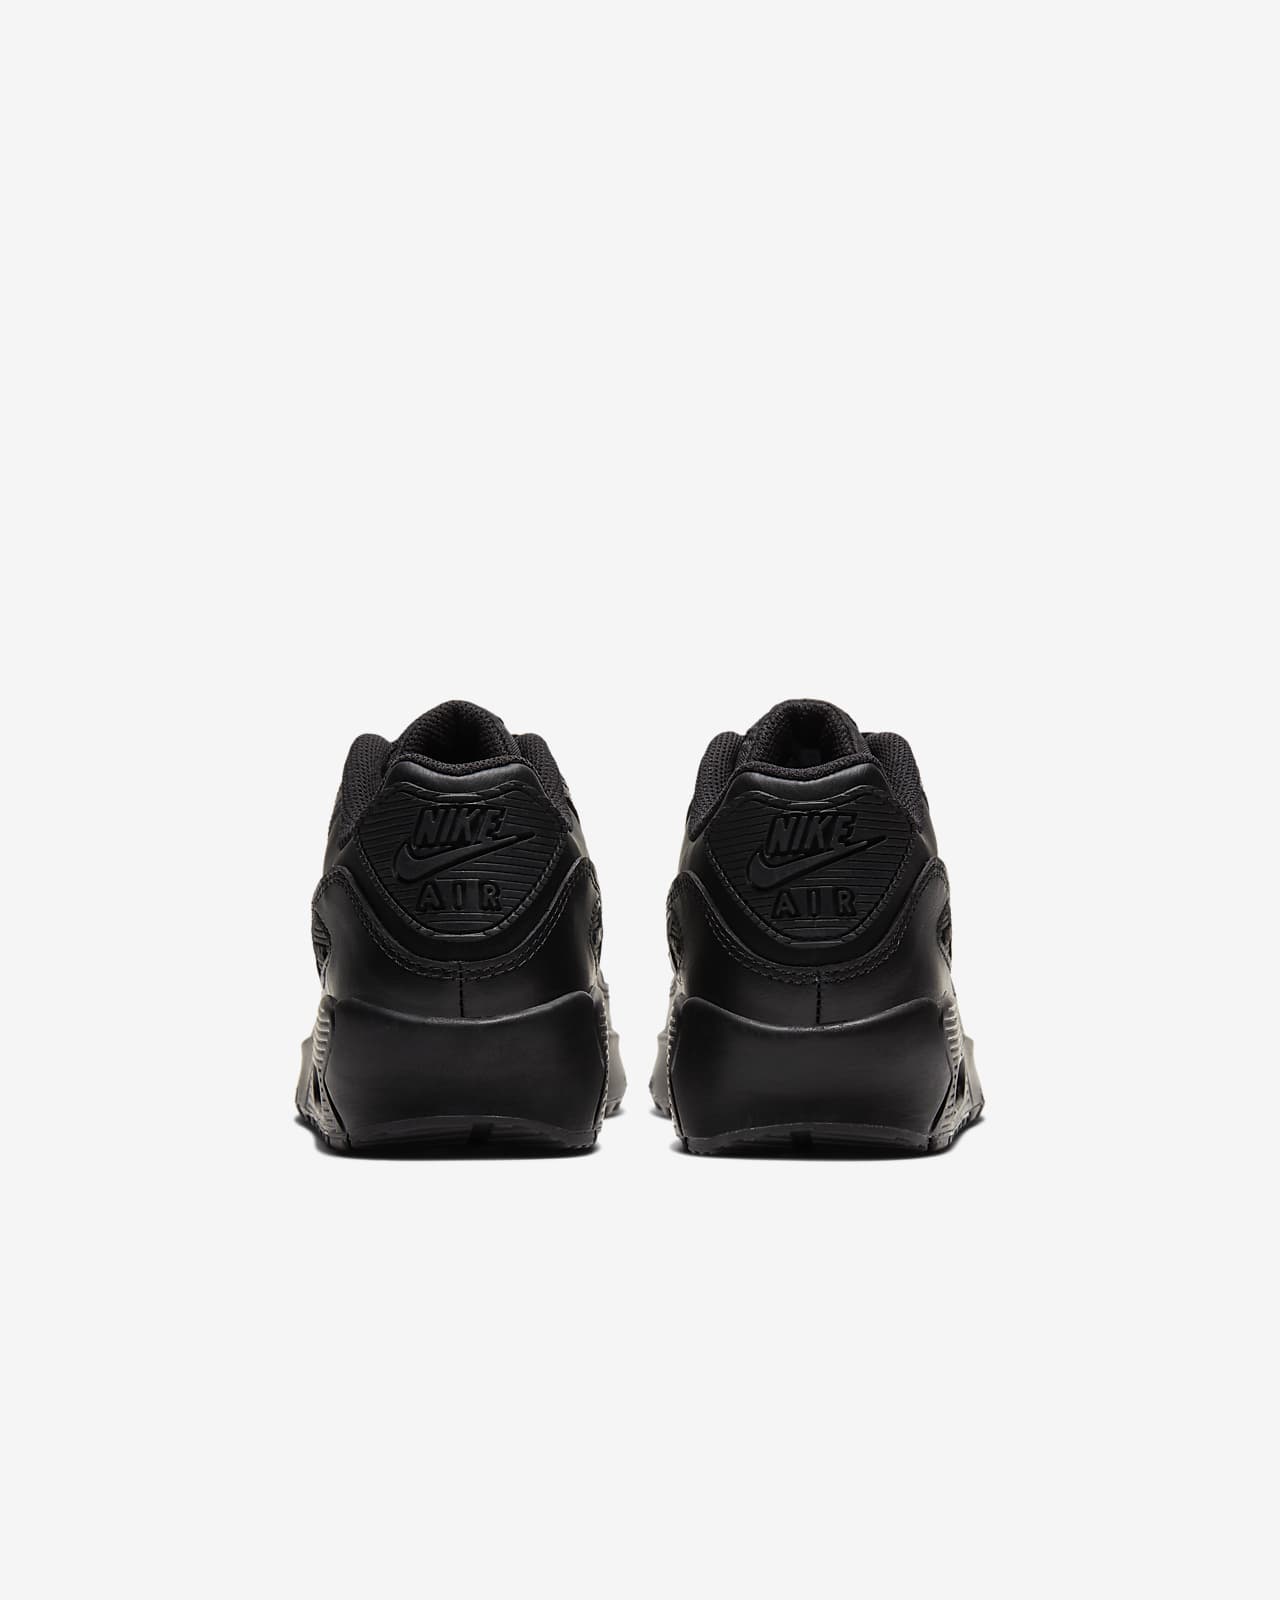 nike shoes black air max